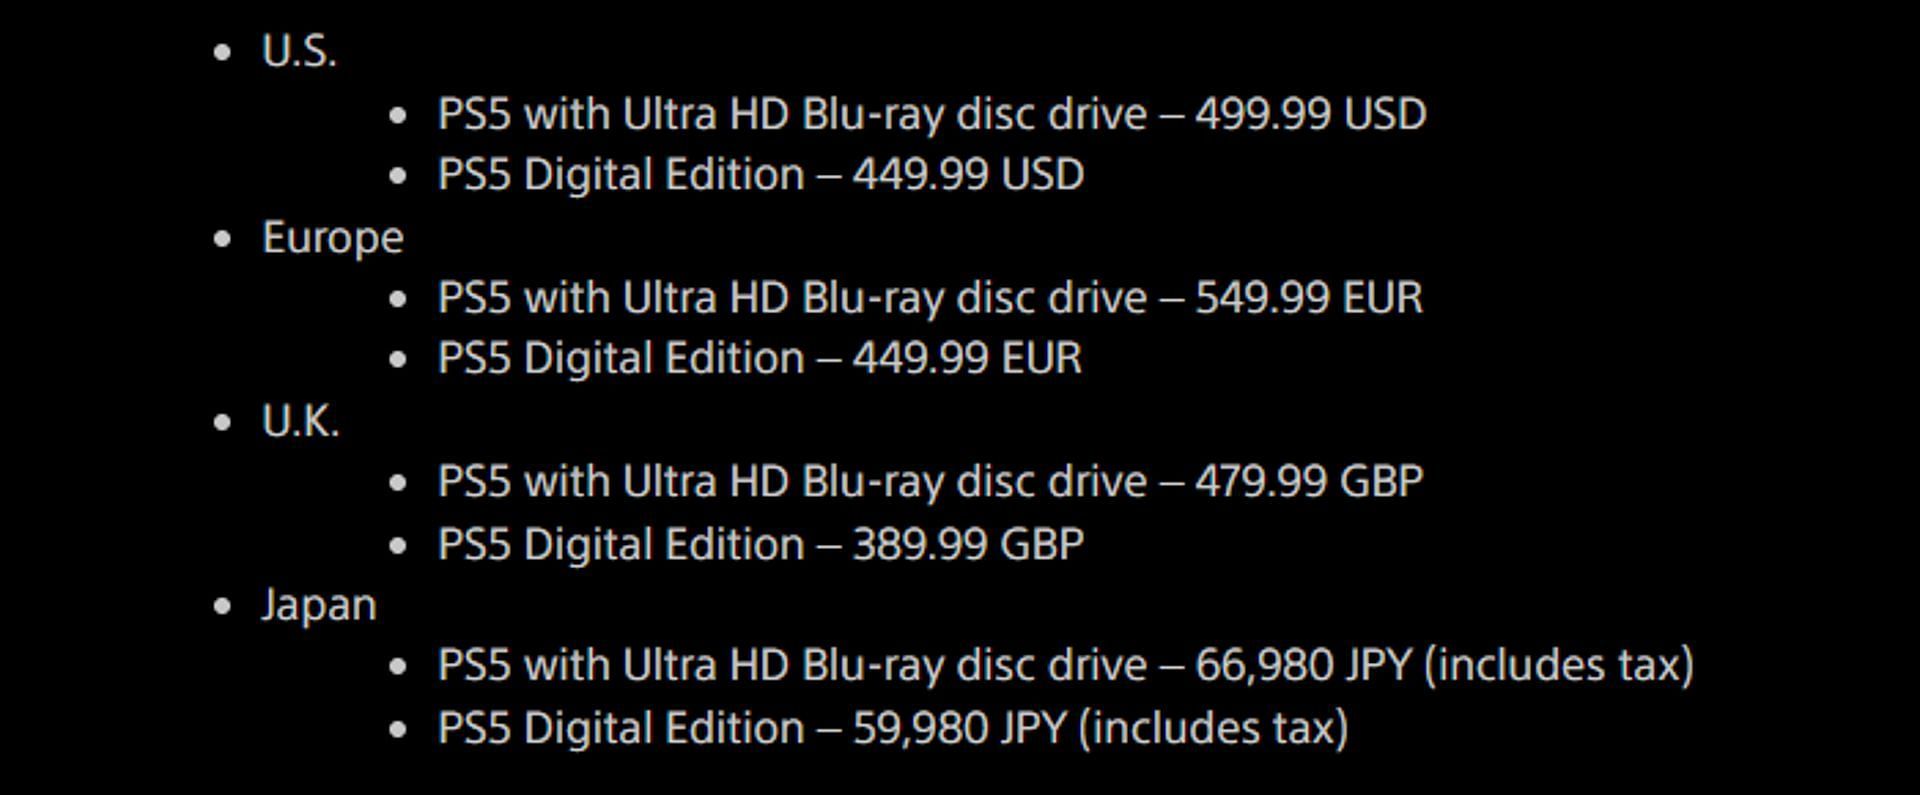 Sony PS5 Slim Ultra HD Blu-ray Disc Drive